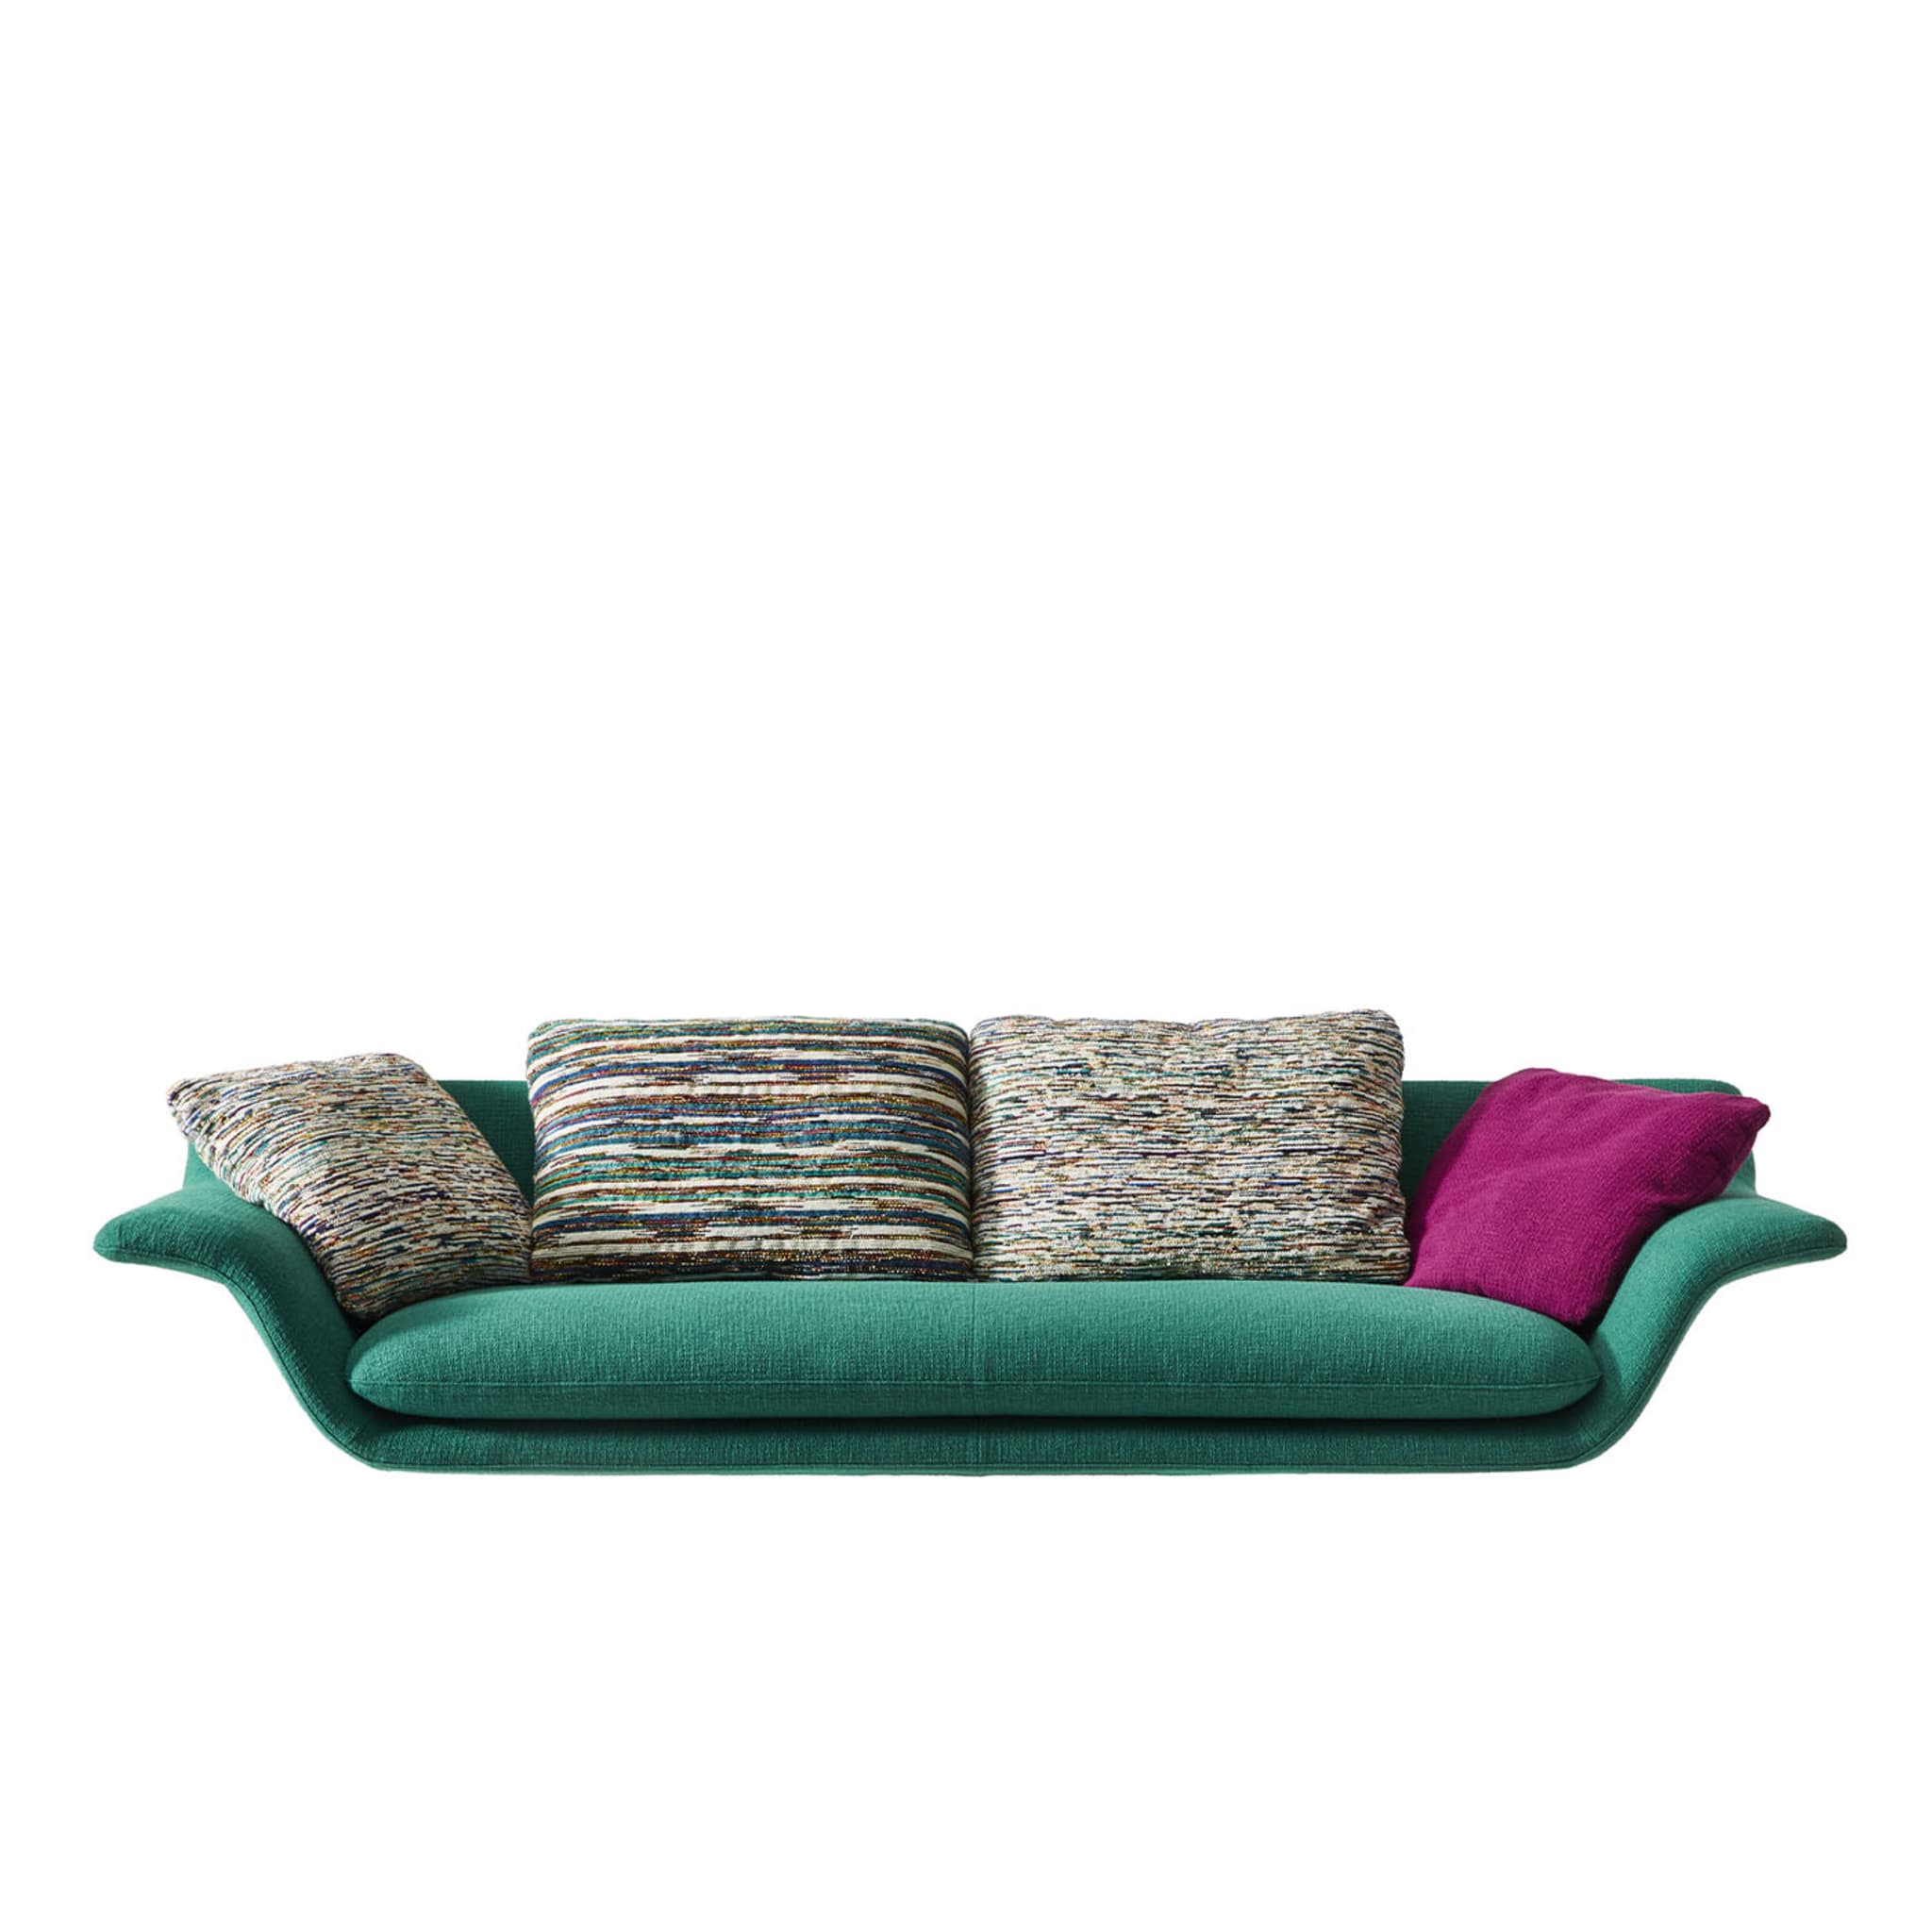 Esosoft 3-Seater Turquoise Sofa by Antonio Citterio - Alternative view 1